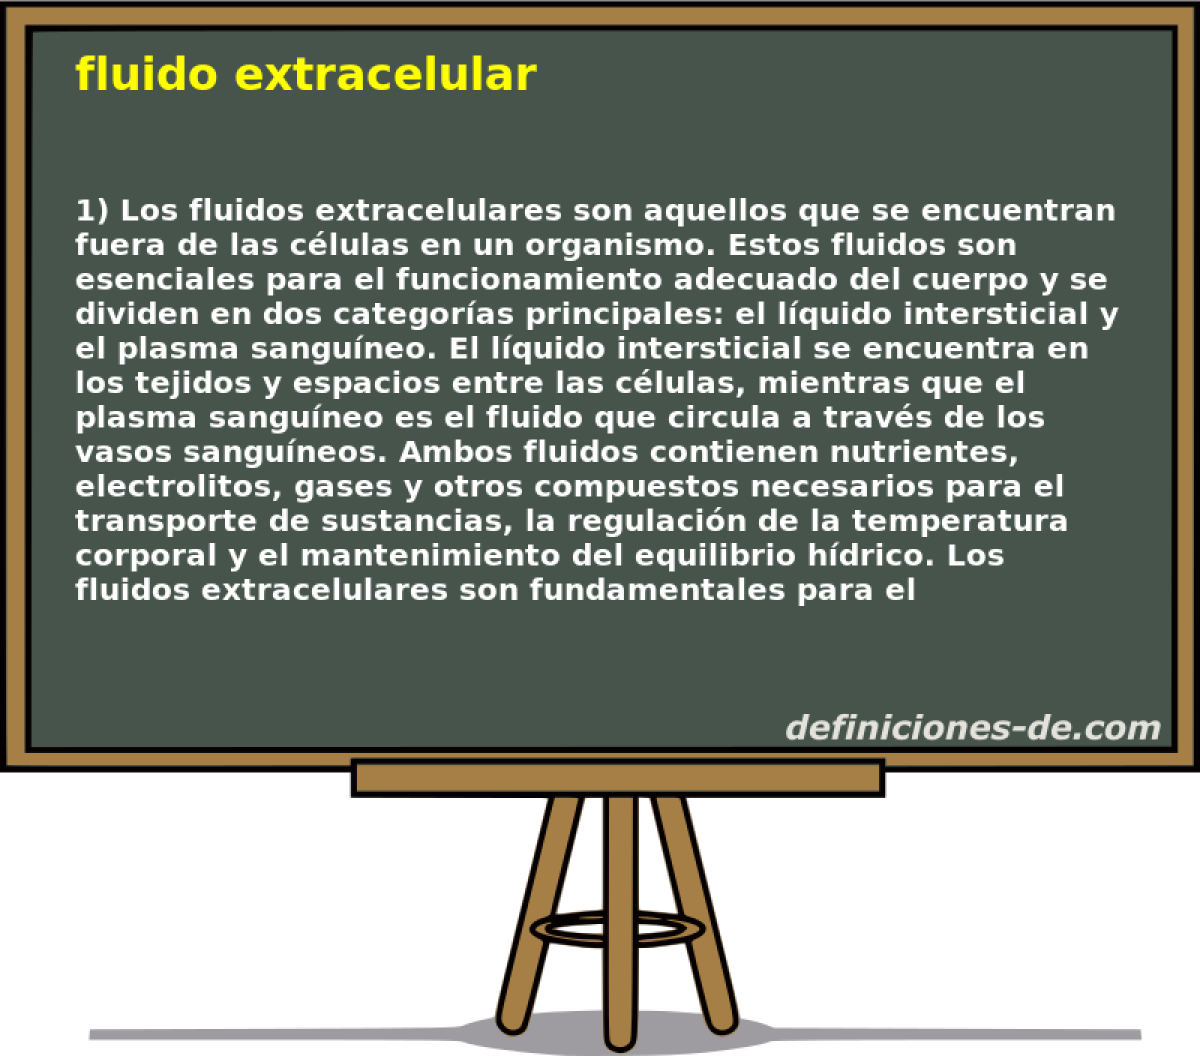 fluido extracelular 